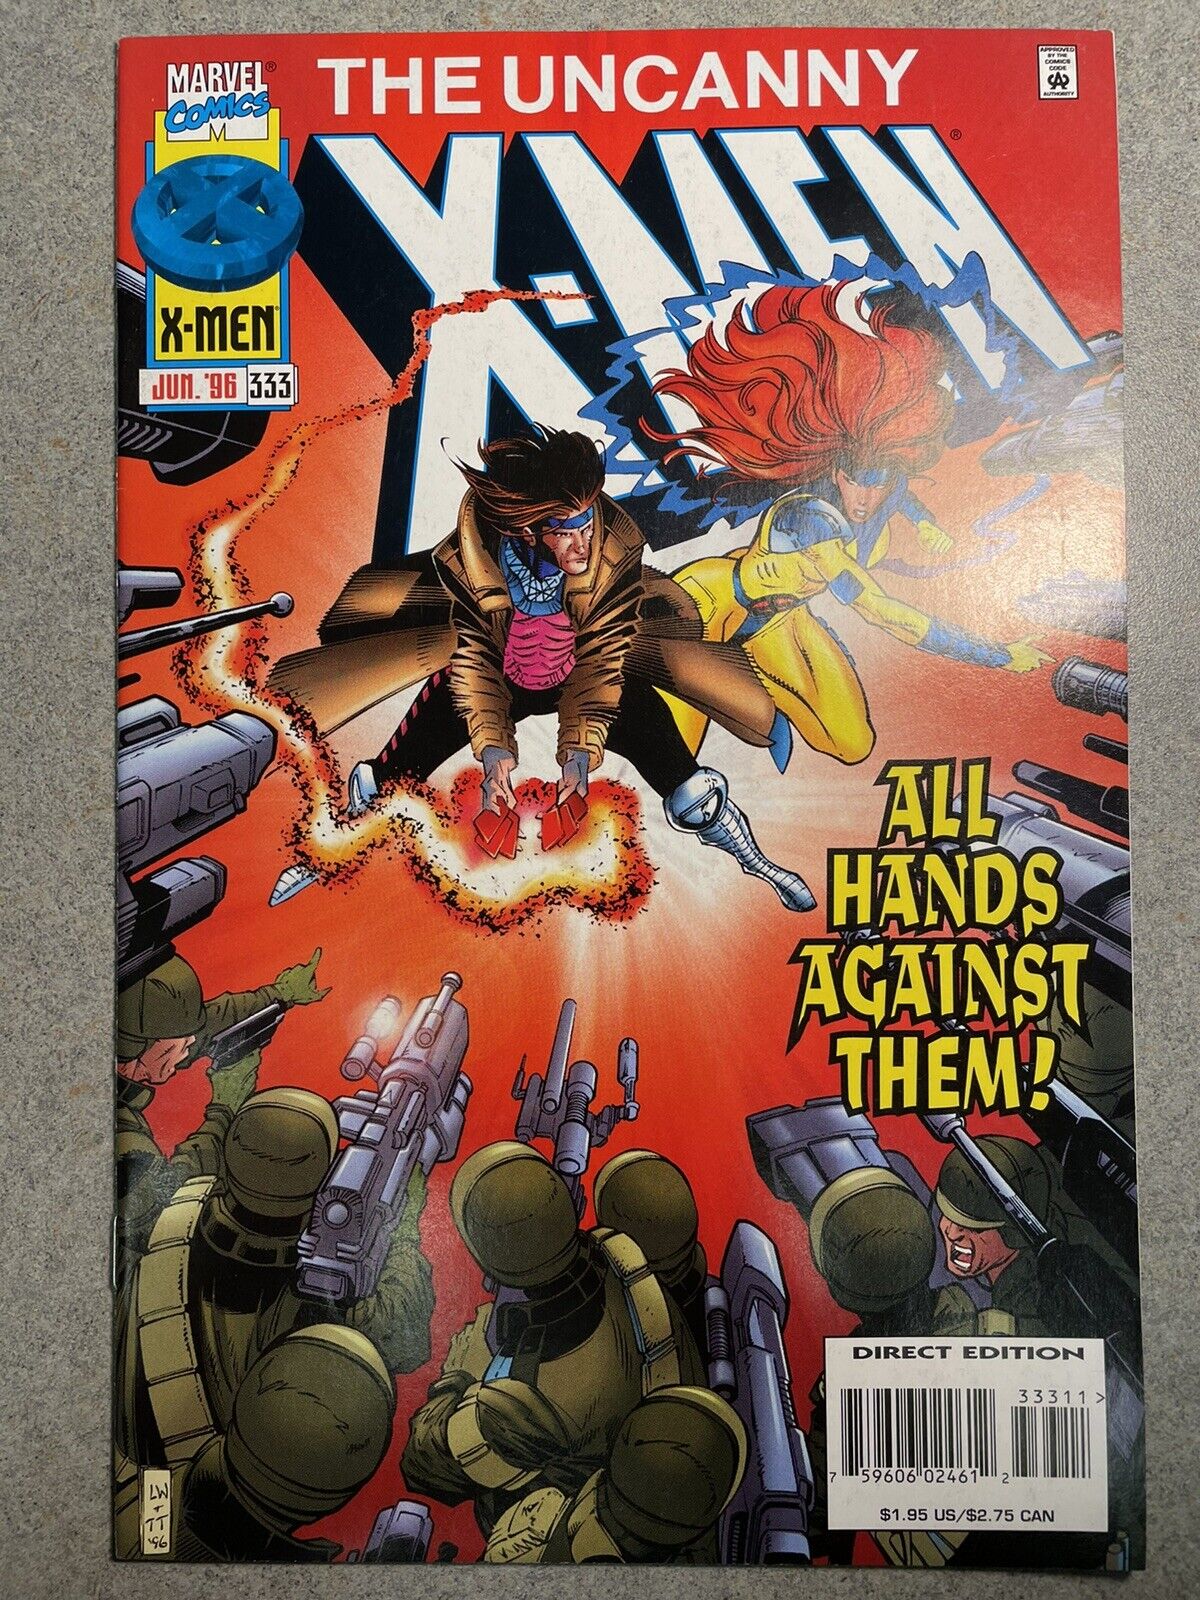 THE UNCANNY X-MEN #333 (1996) KEY 1ST FULL APPEARANCE OF BASTION